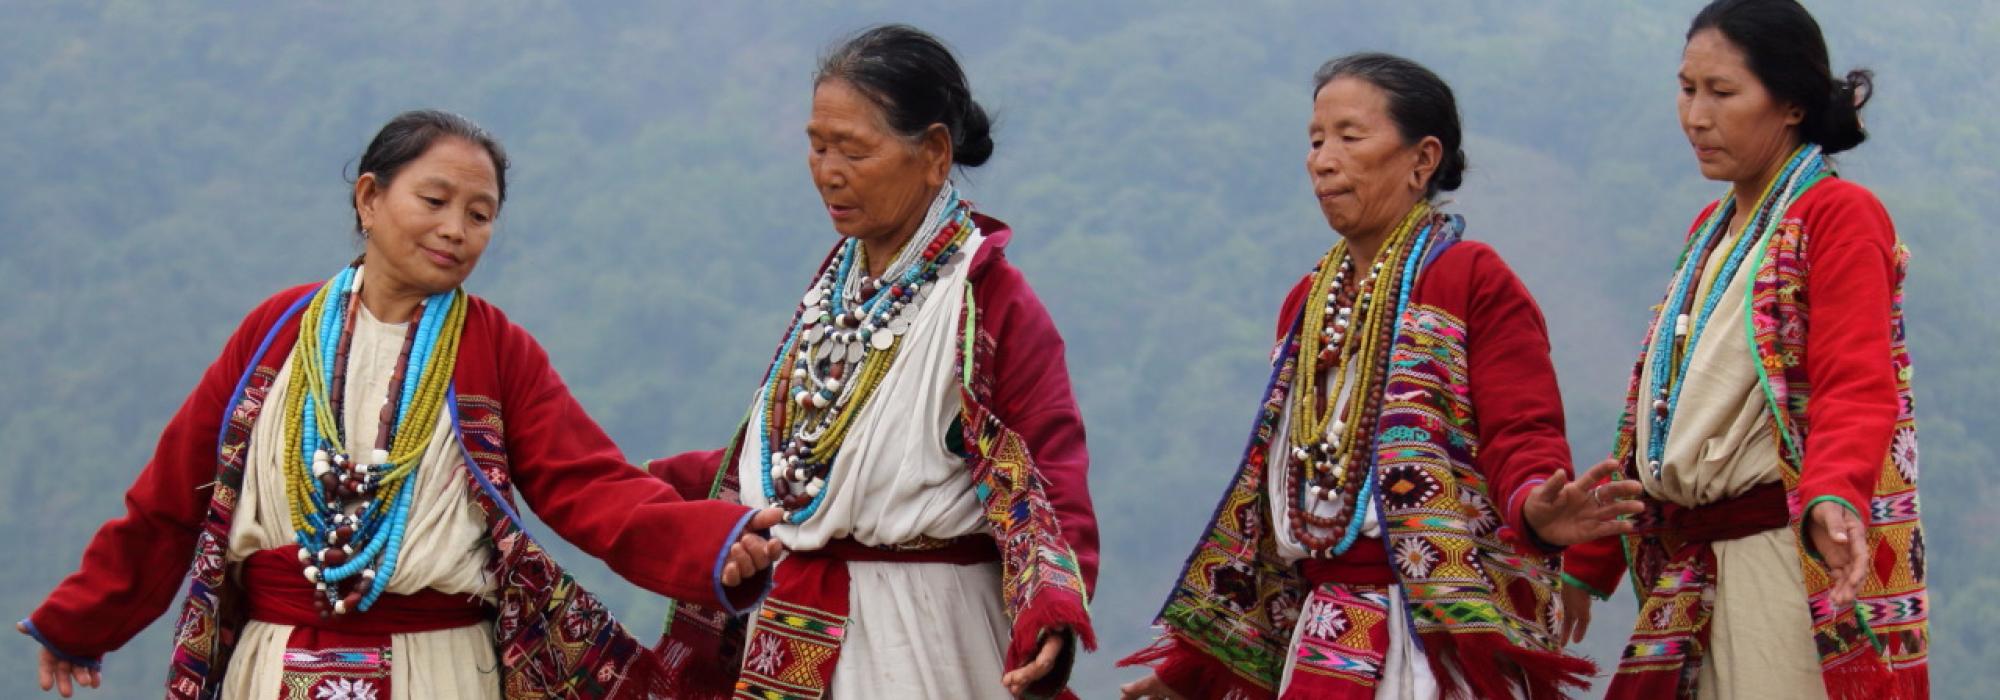 Northern India – Women dancing